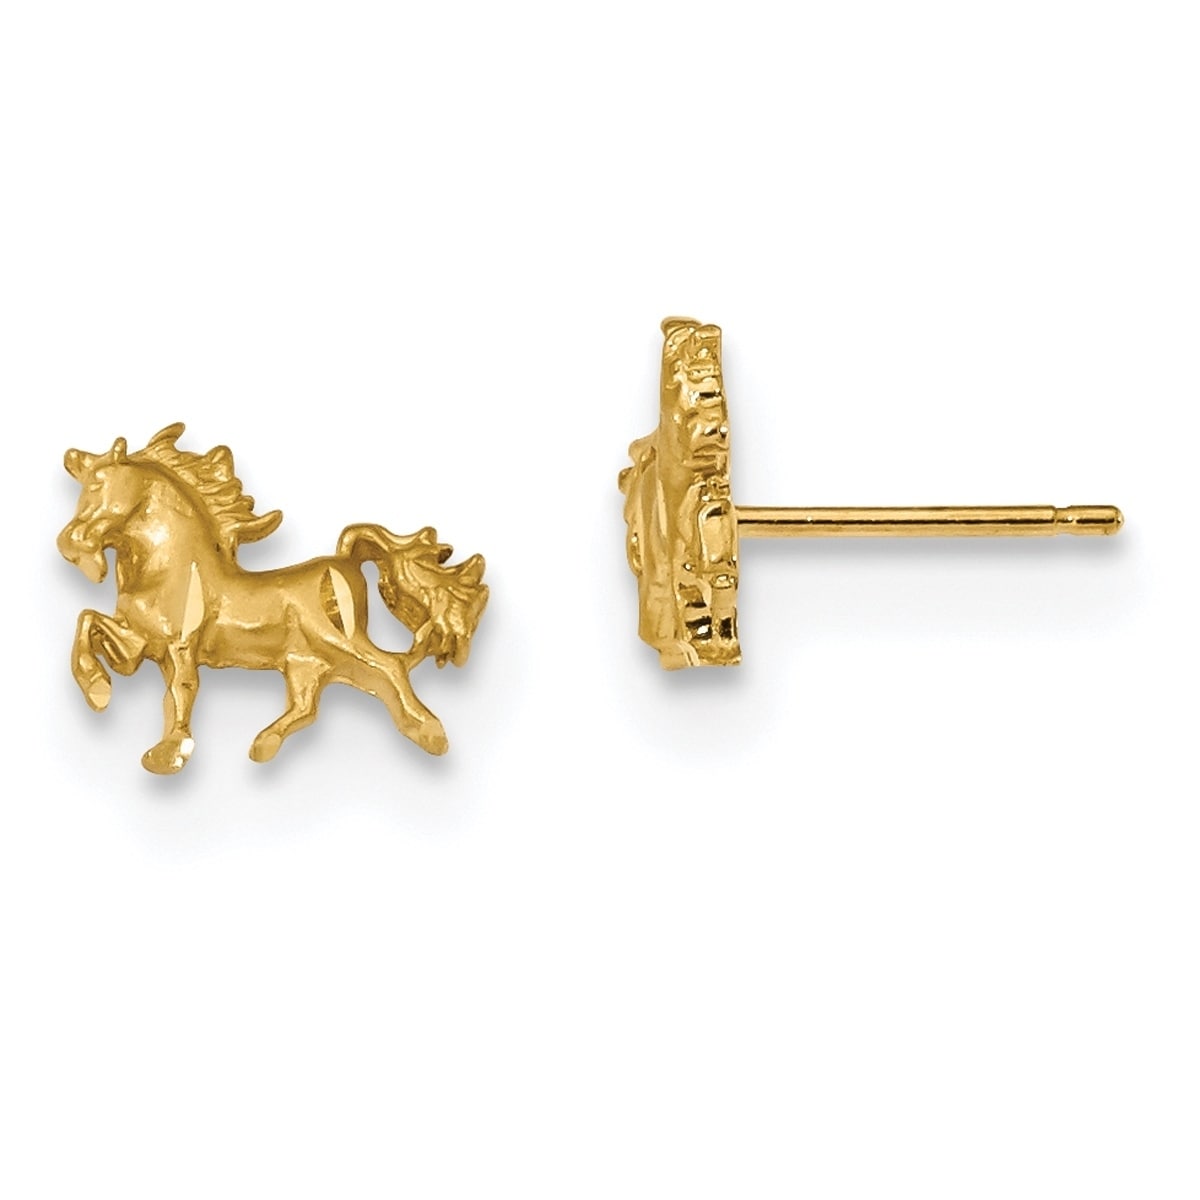 Details about   Vintage Estate Fancy Ornate 14K Yellow Gold Plated Unicorn Pierced Earrings 